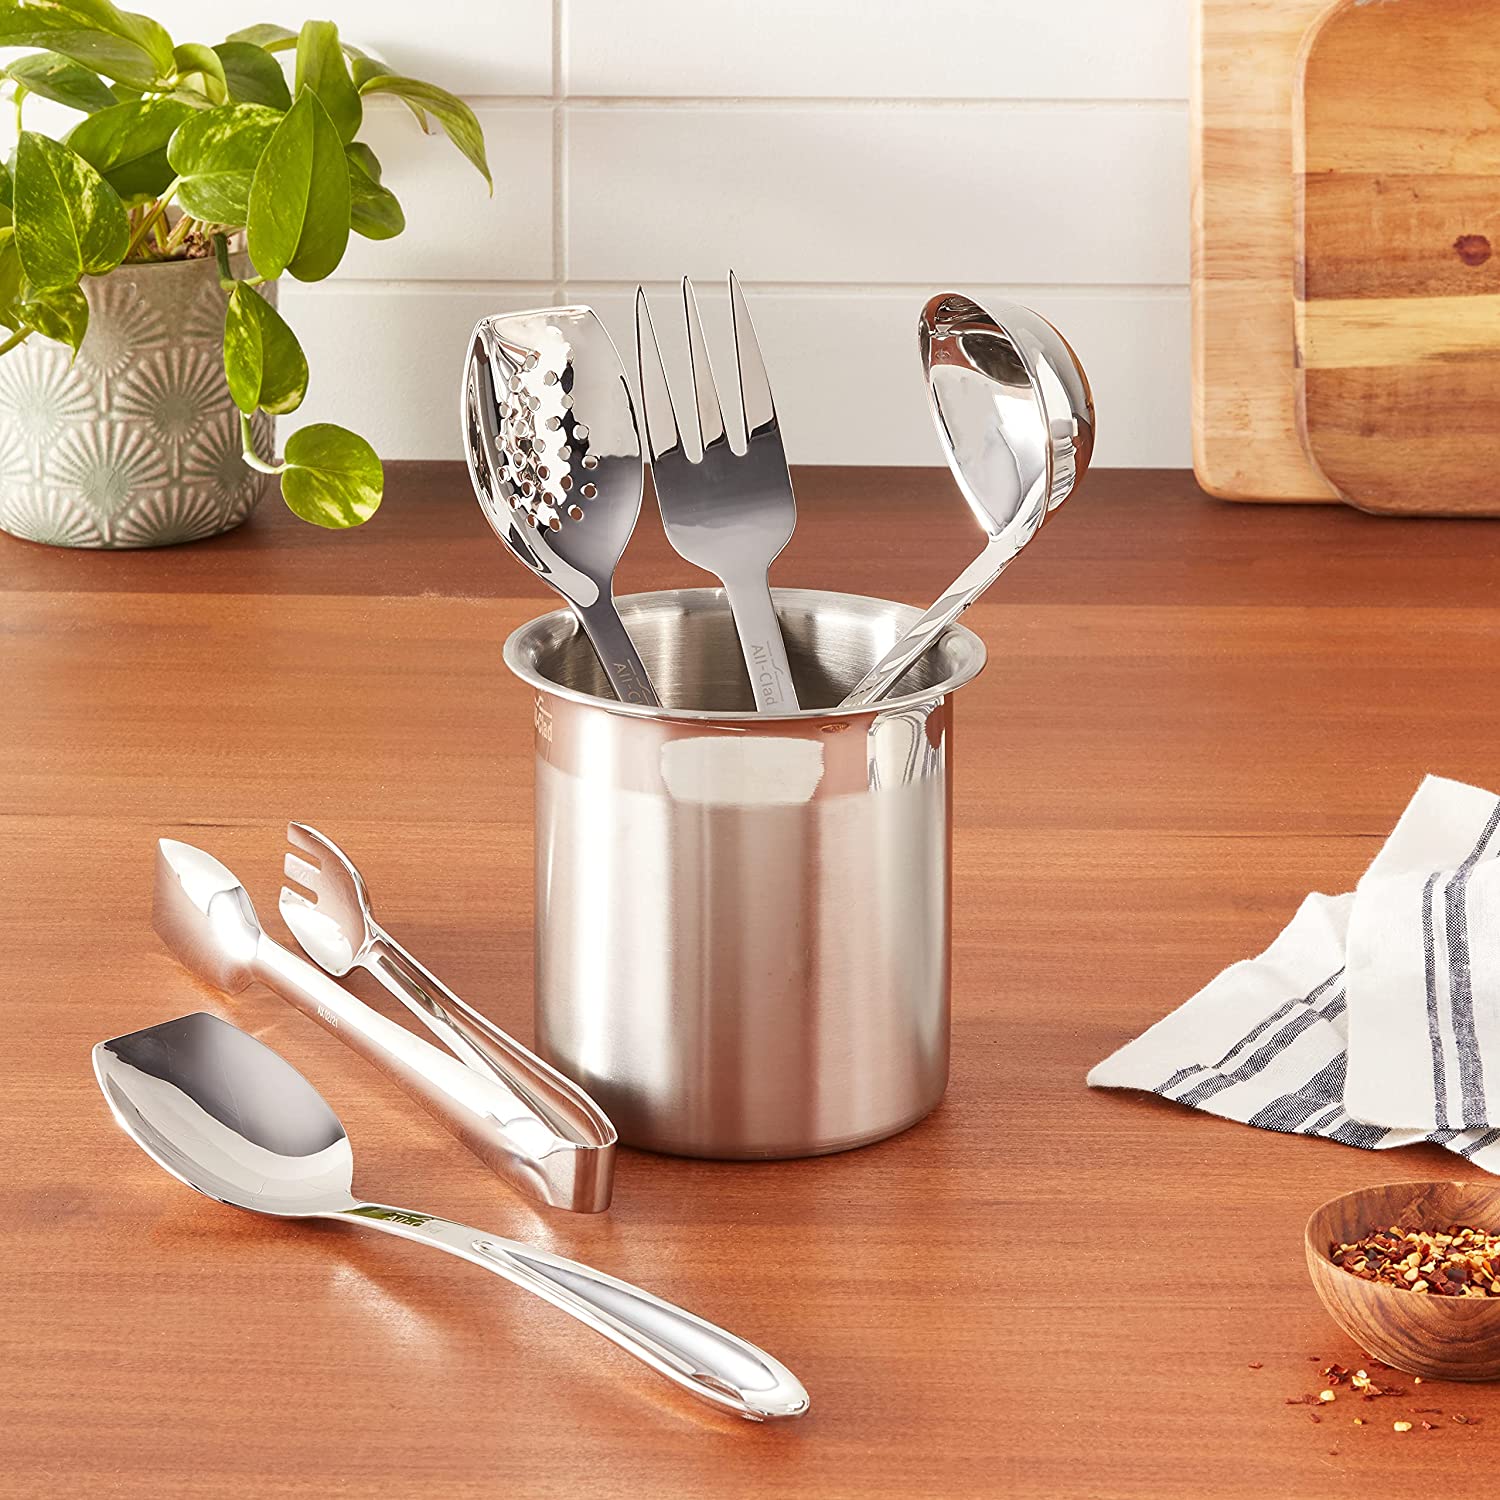 stainless steel cooking utensils